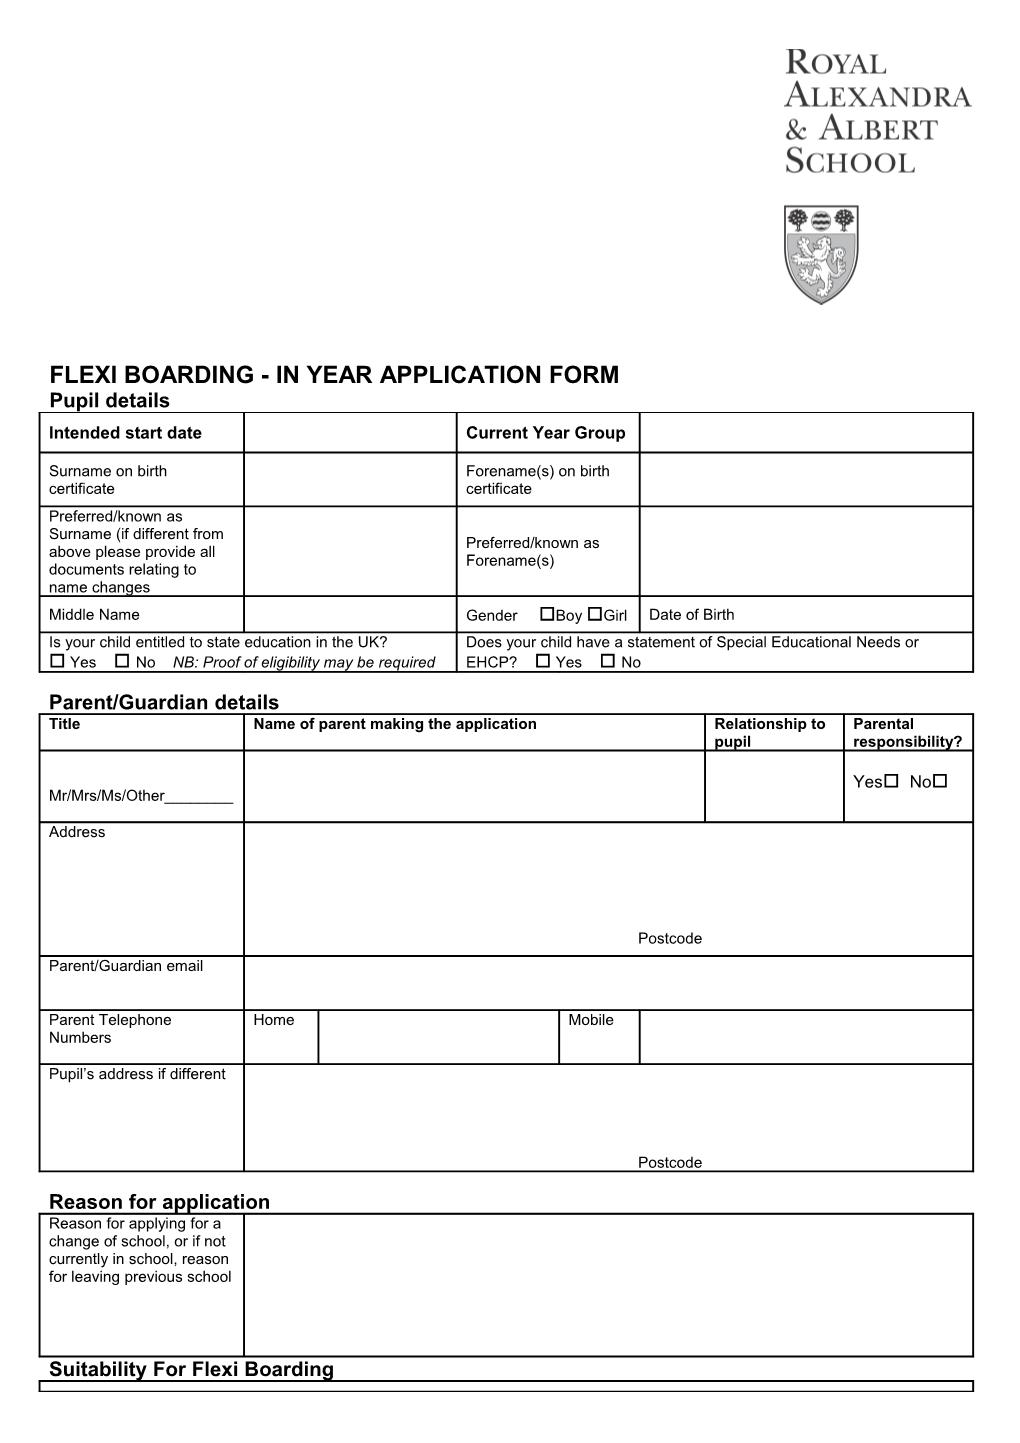 Flexiboarding - in Year Application Form